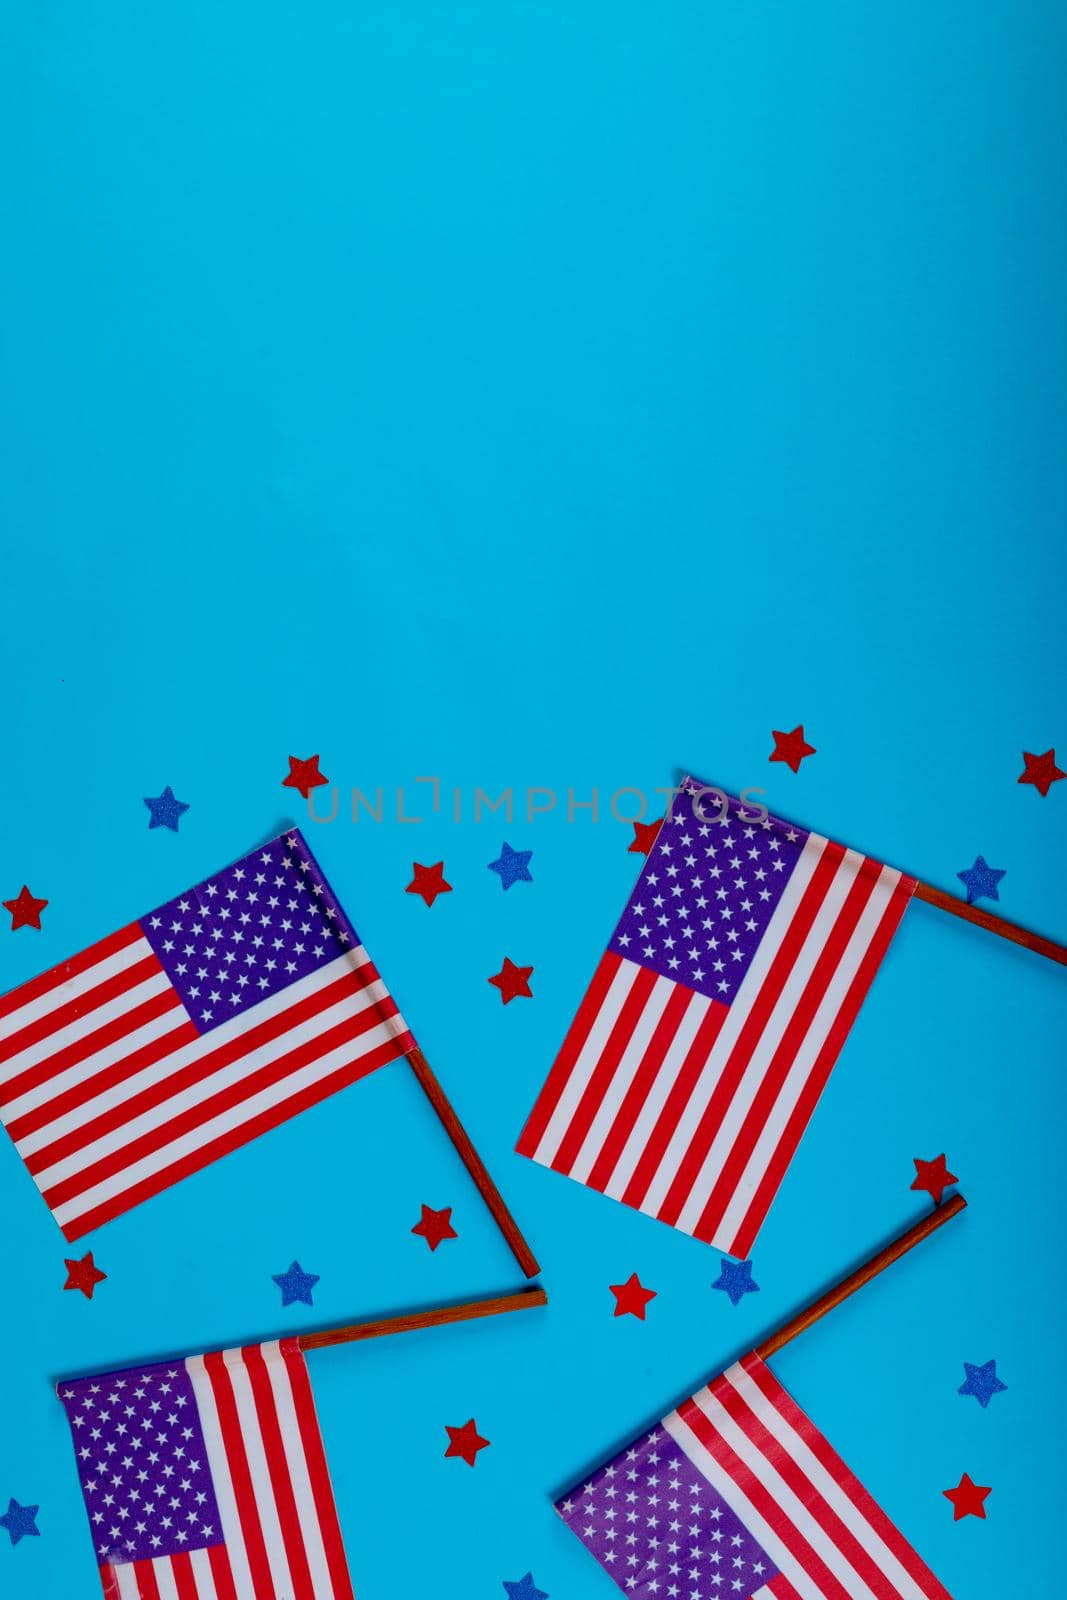 Usa flag sticks with star shape confetti by copy space on blue background by Wavebreakmedia